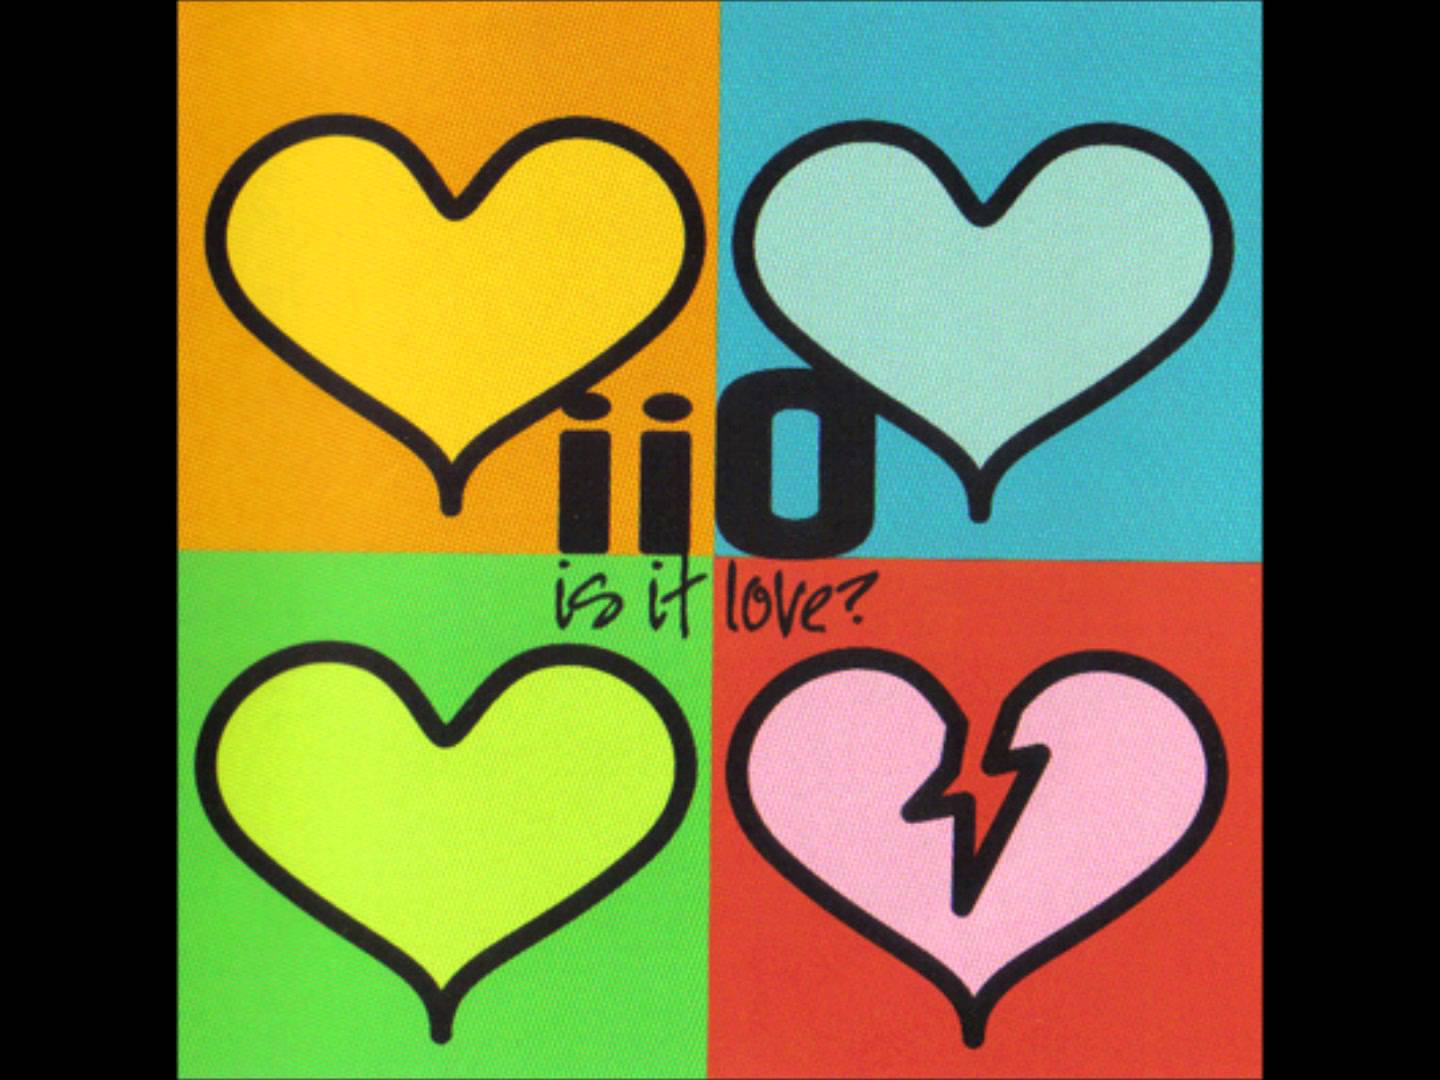 Iio / Is it love?? chriss ortega remix 